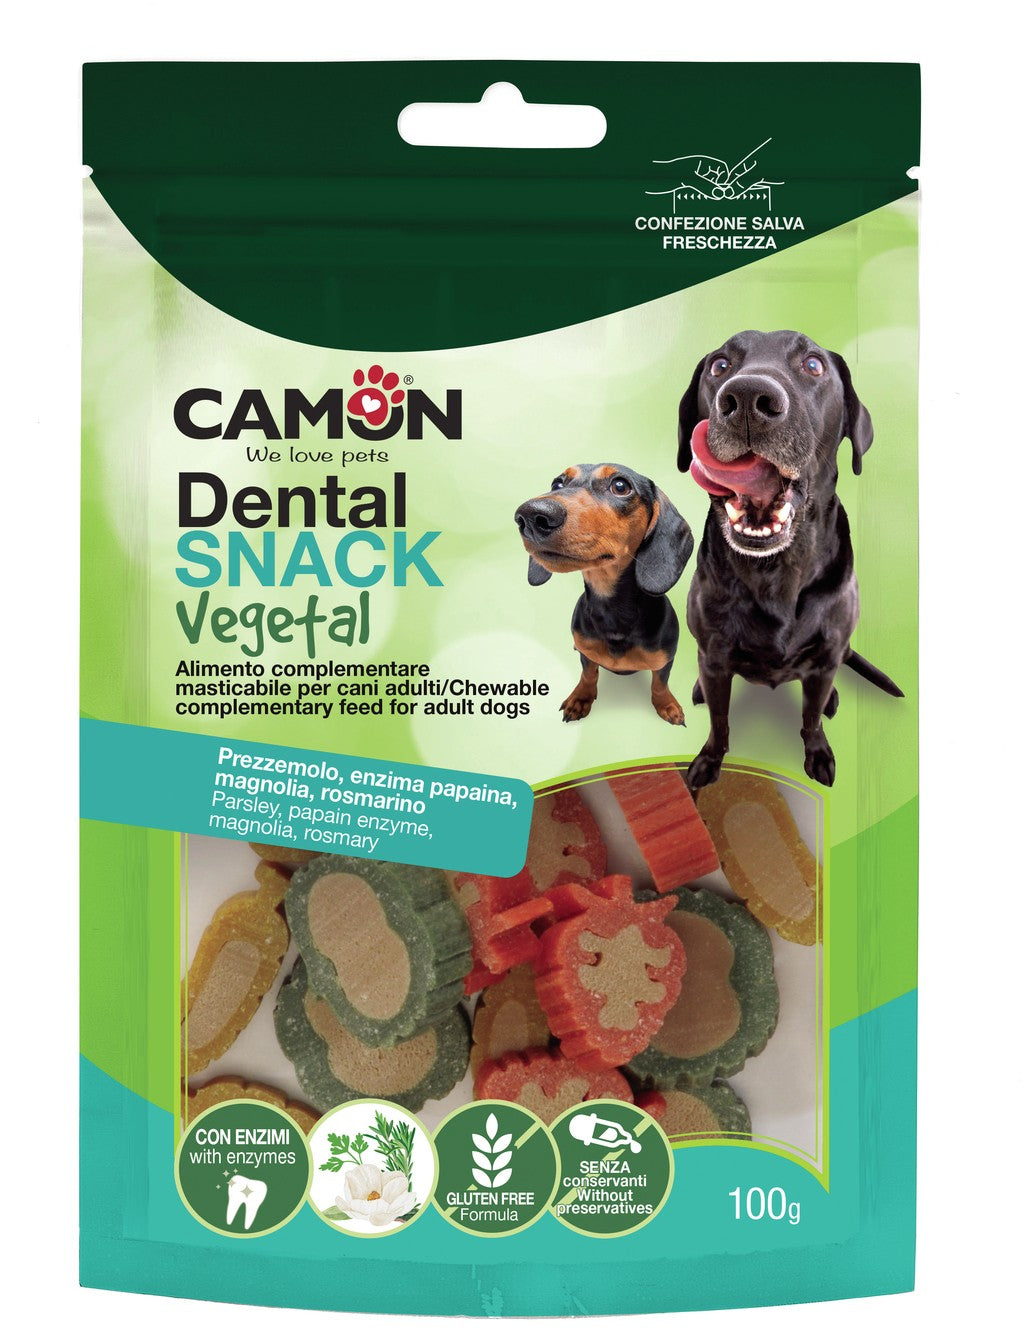 Camon Dental Snack Enzyfruits - AE378